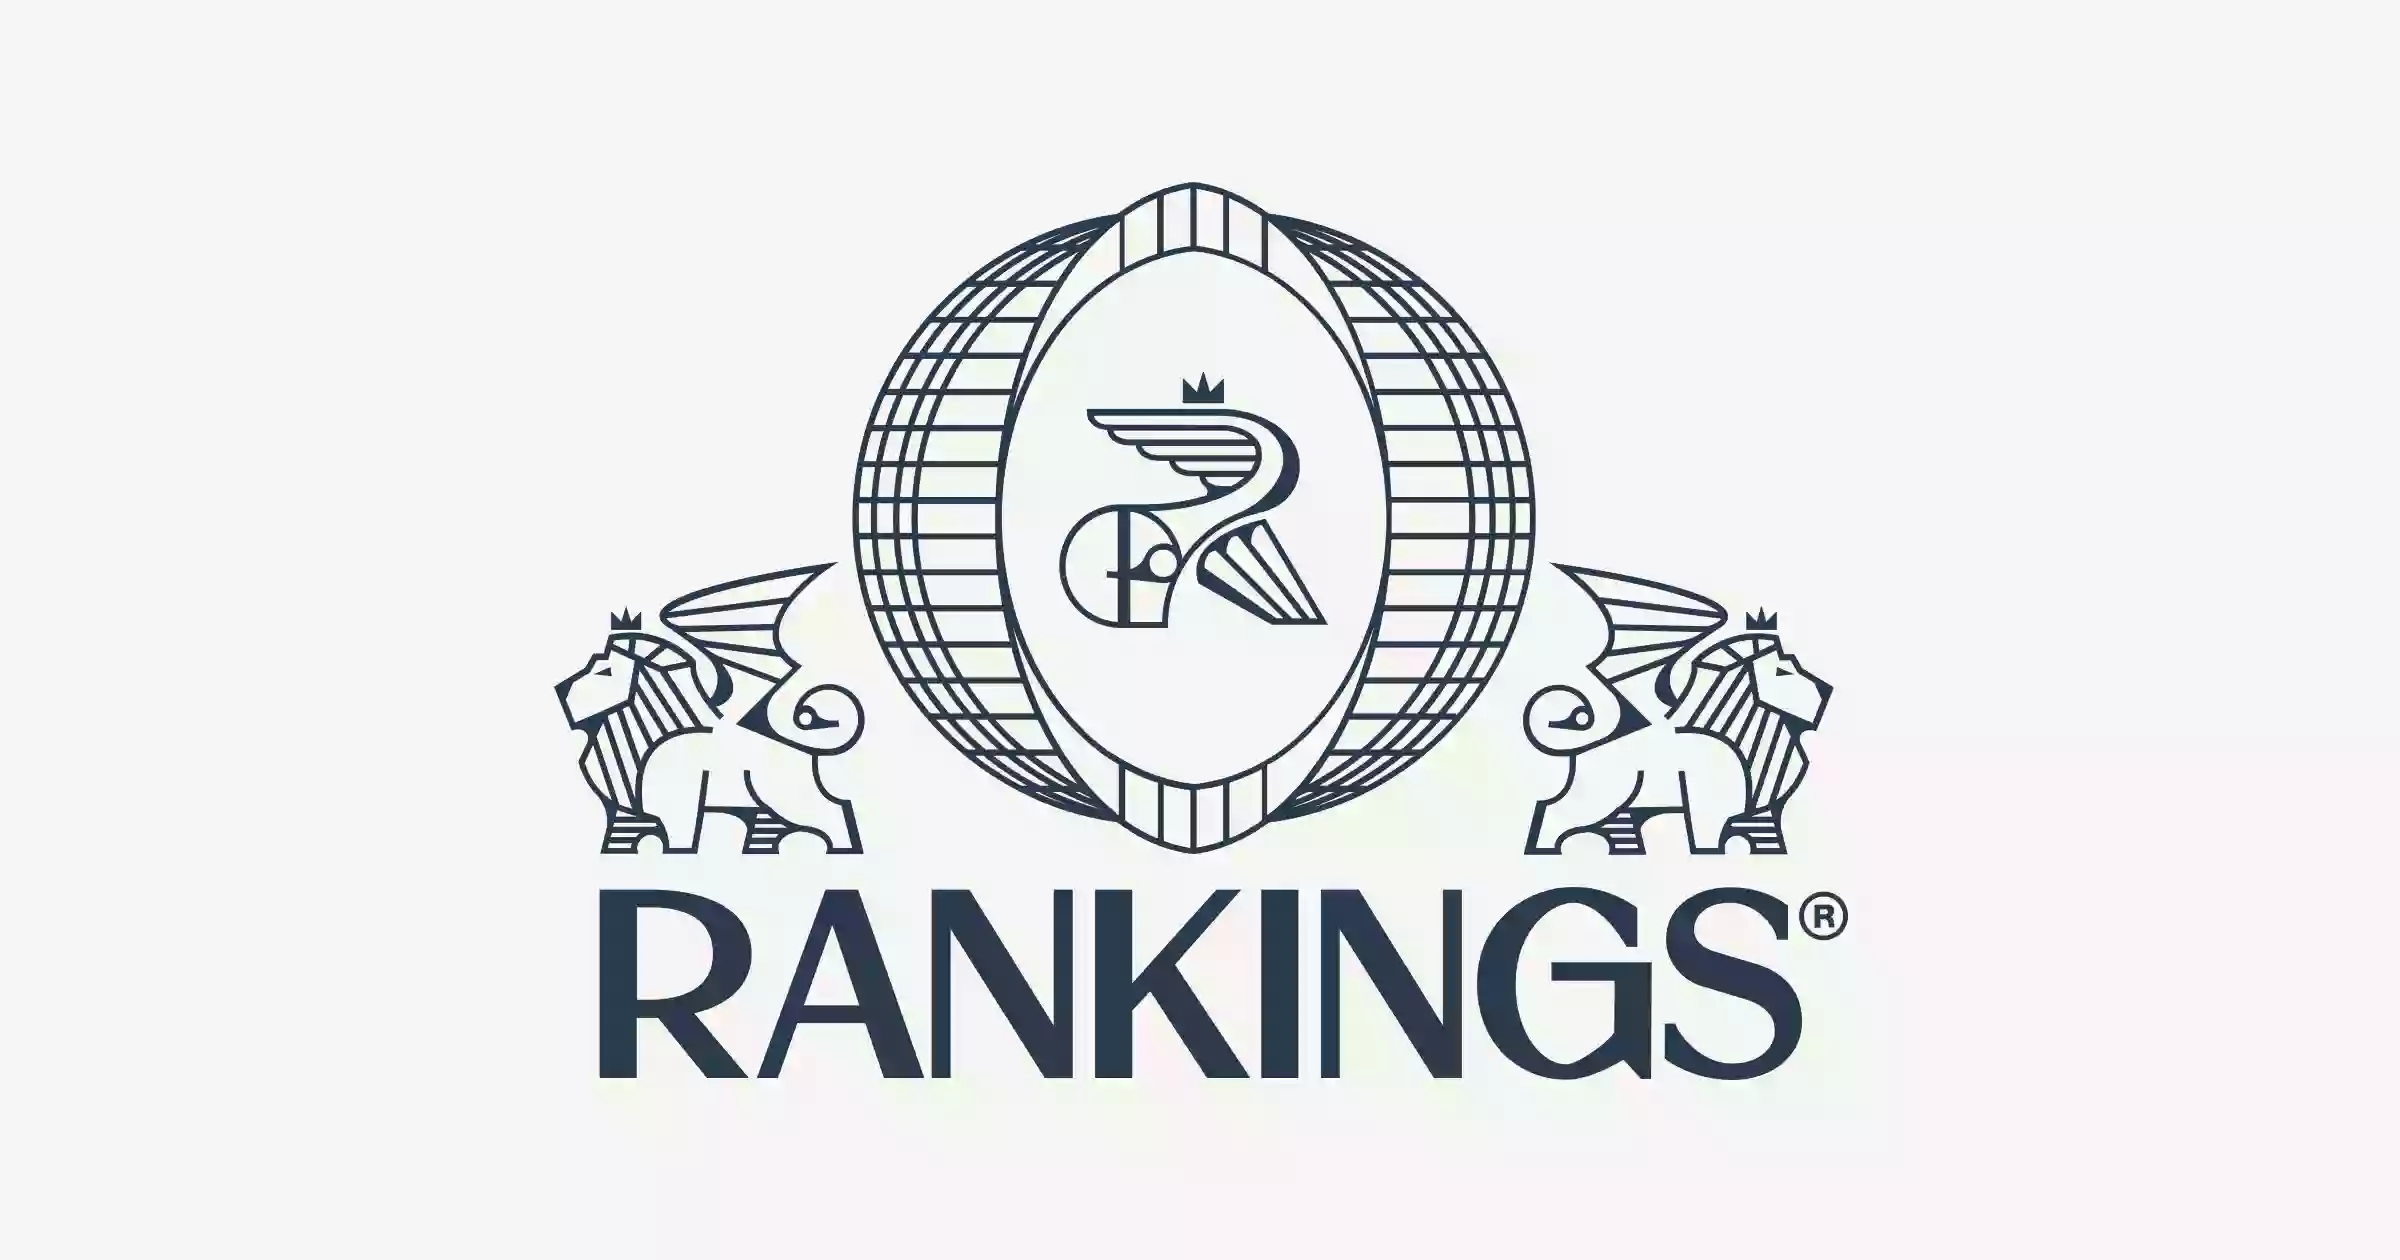 Rankings.io, LLC